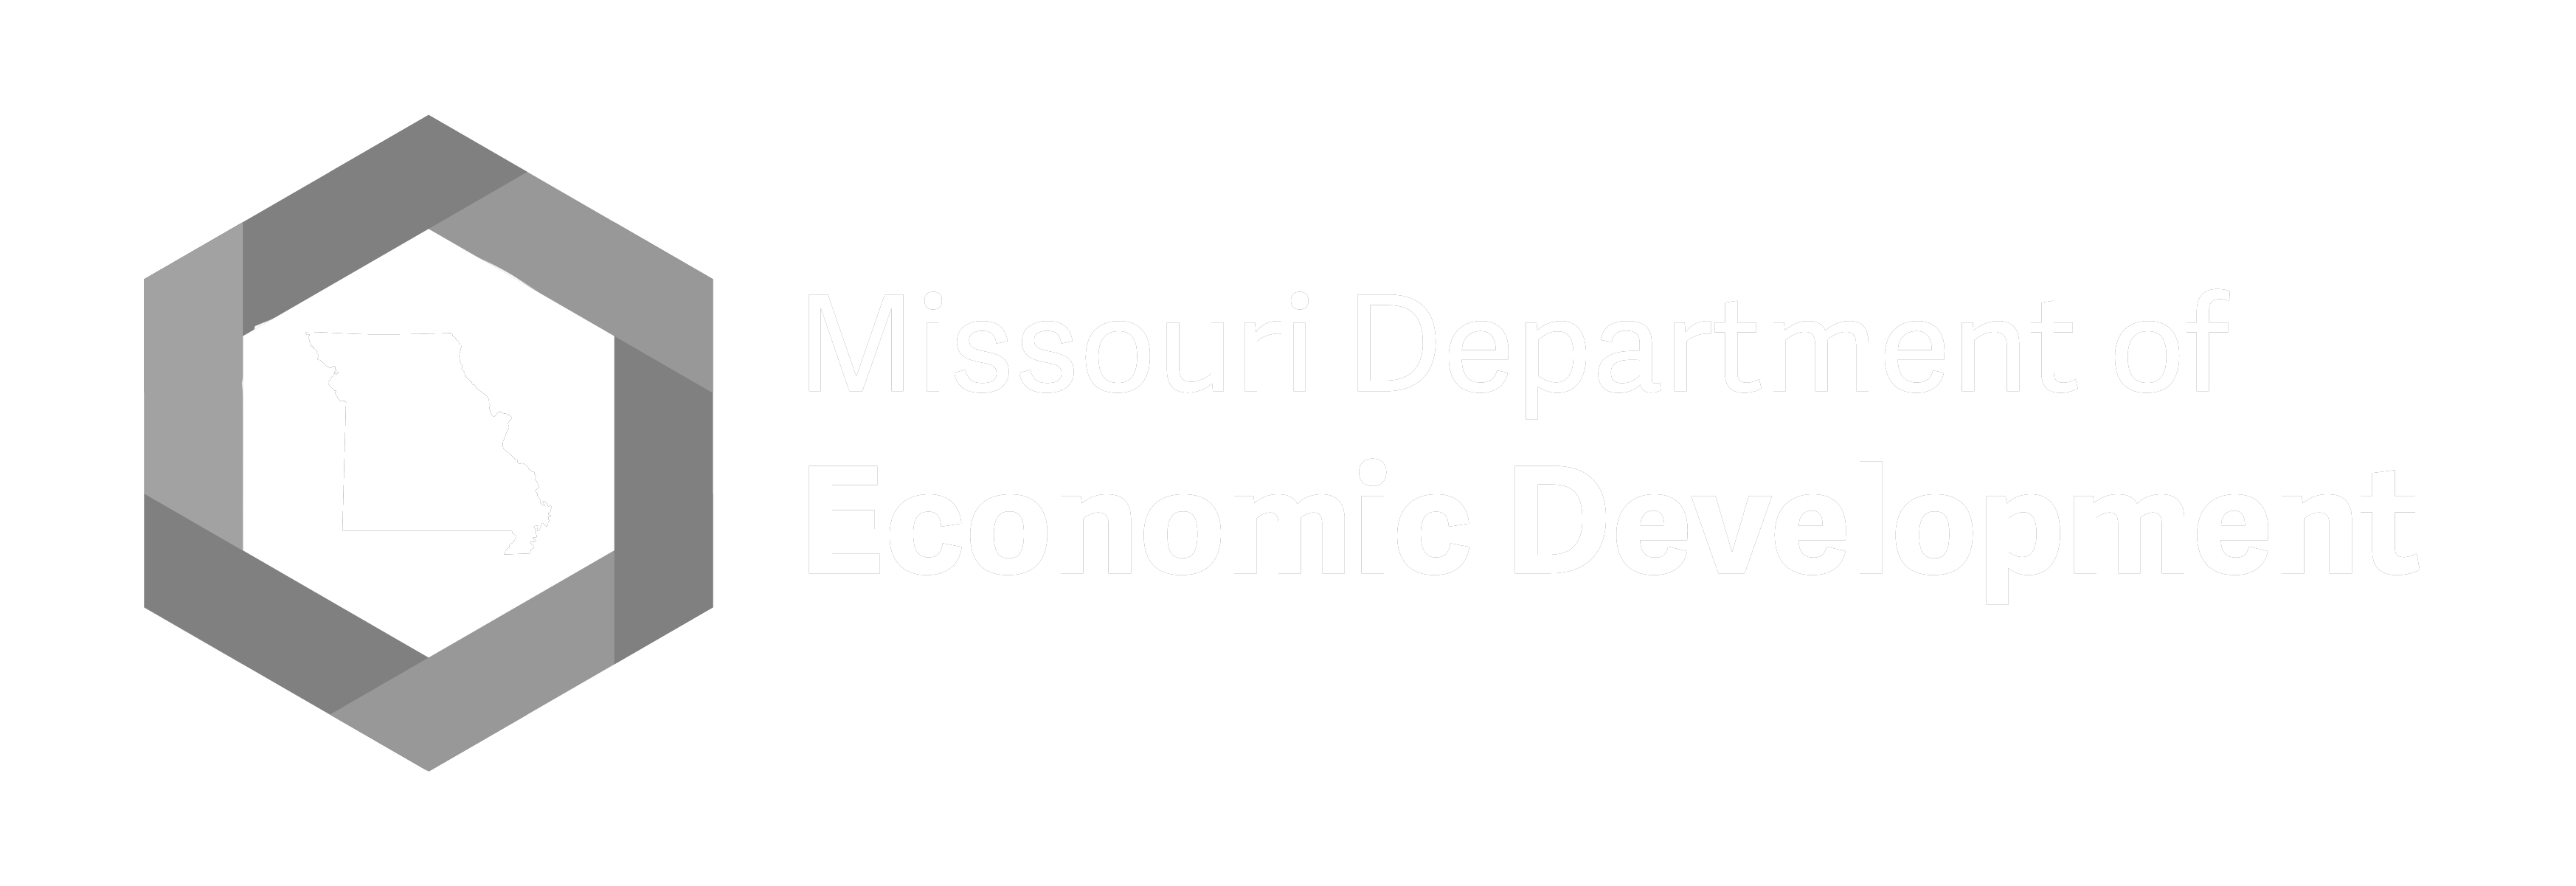 Logo for Missouri Department of Economic Development